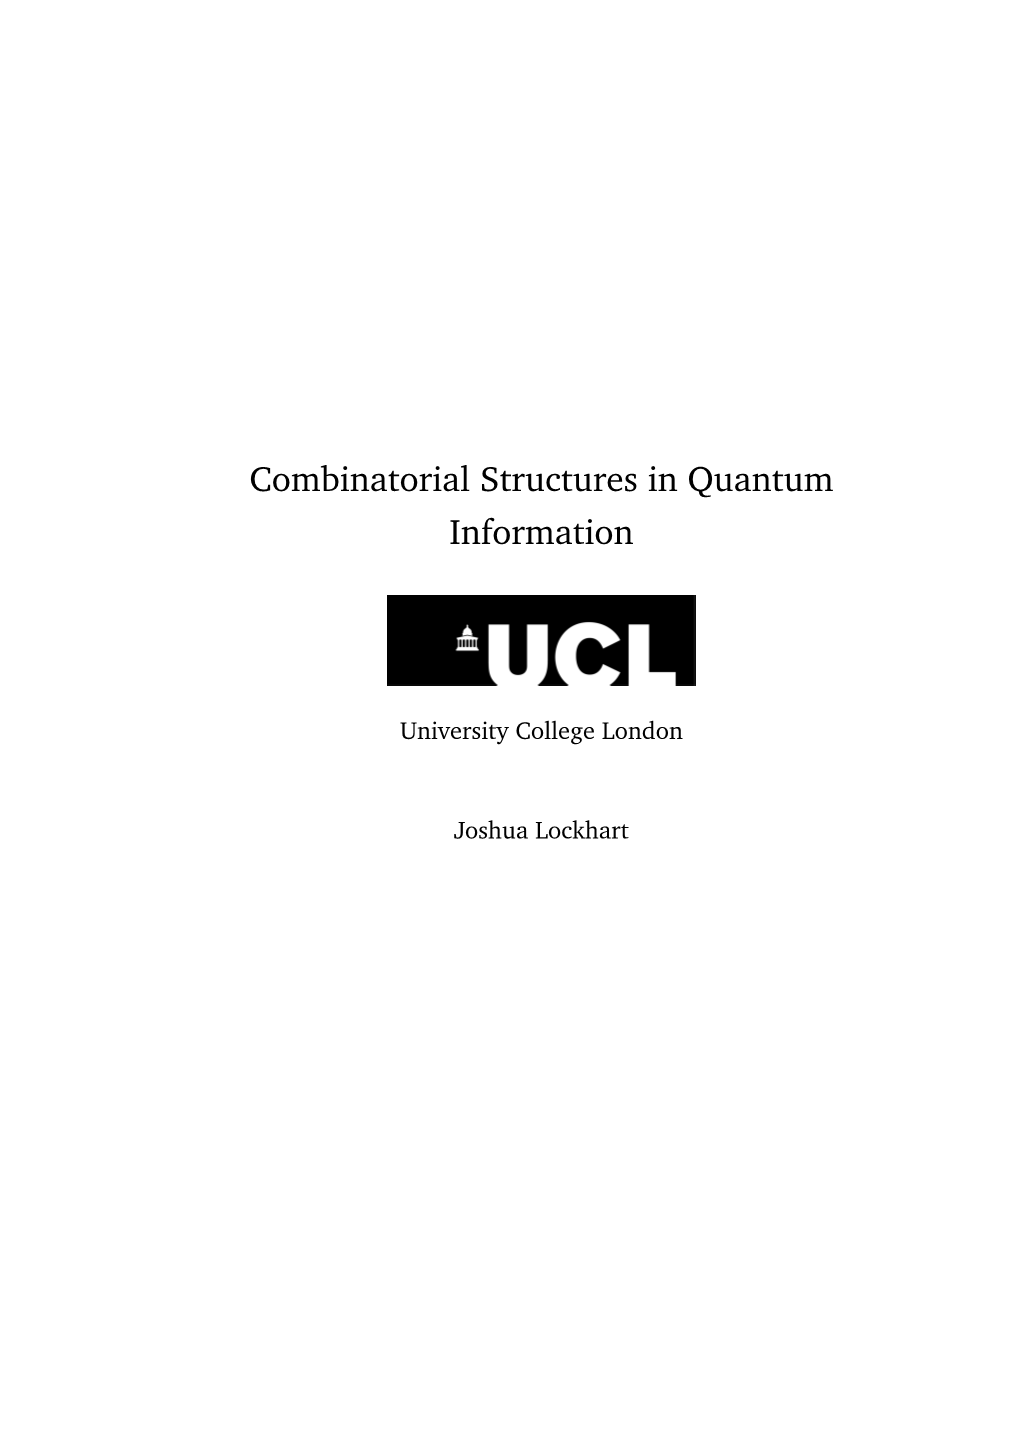 Combinatorial Structures in Quantum Information